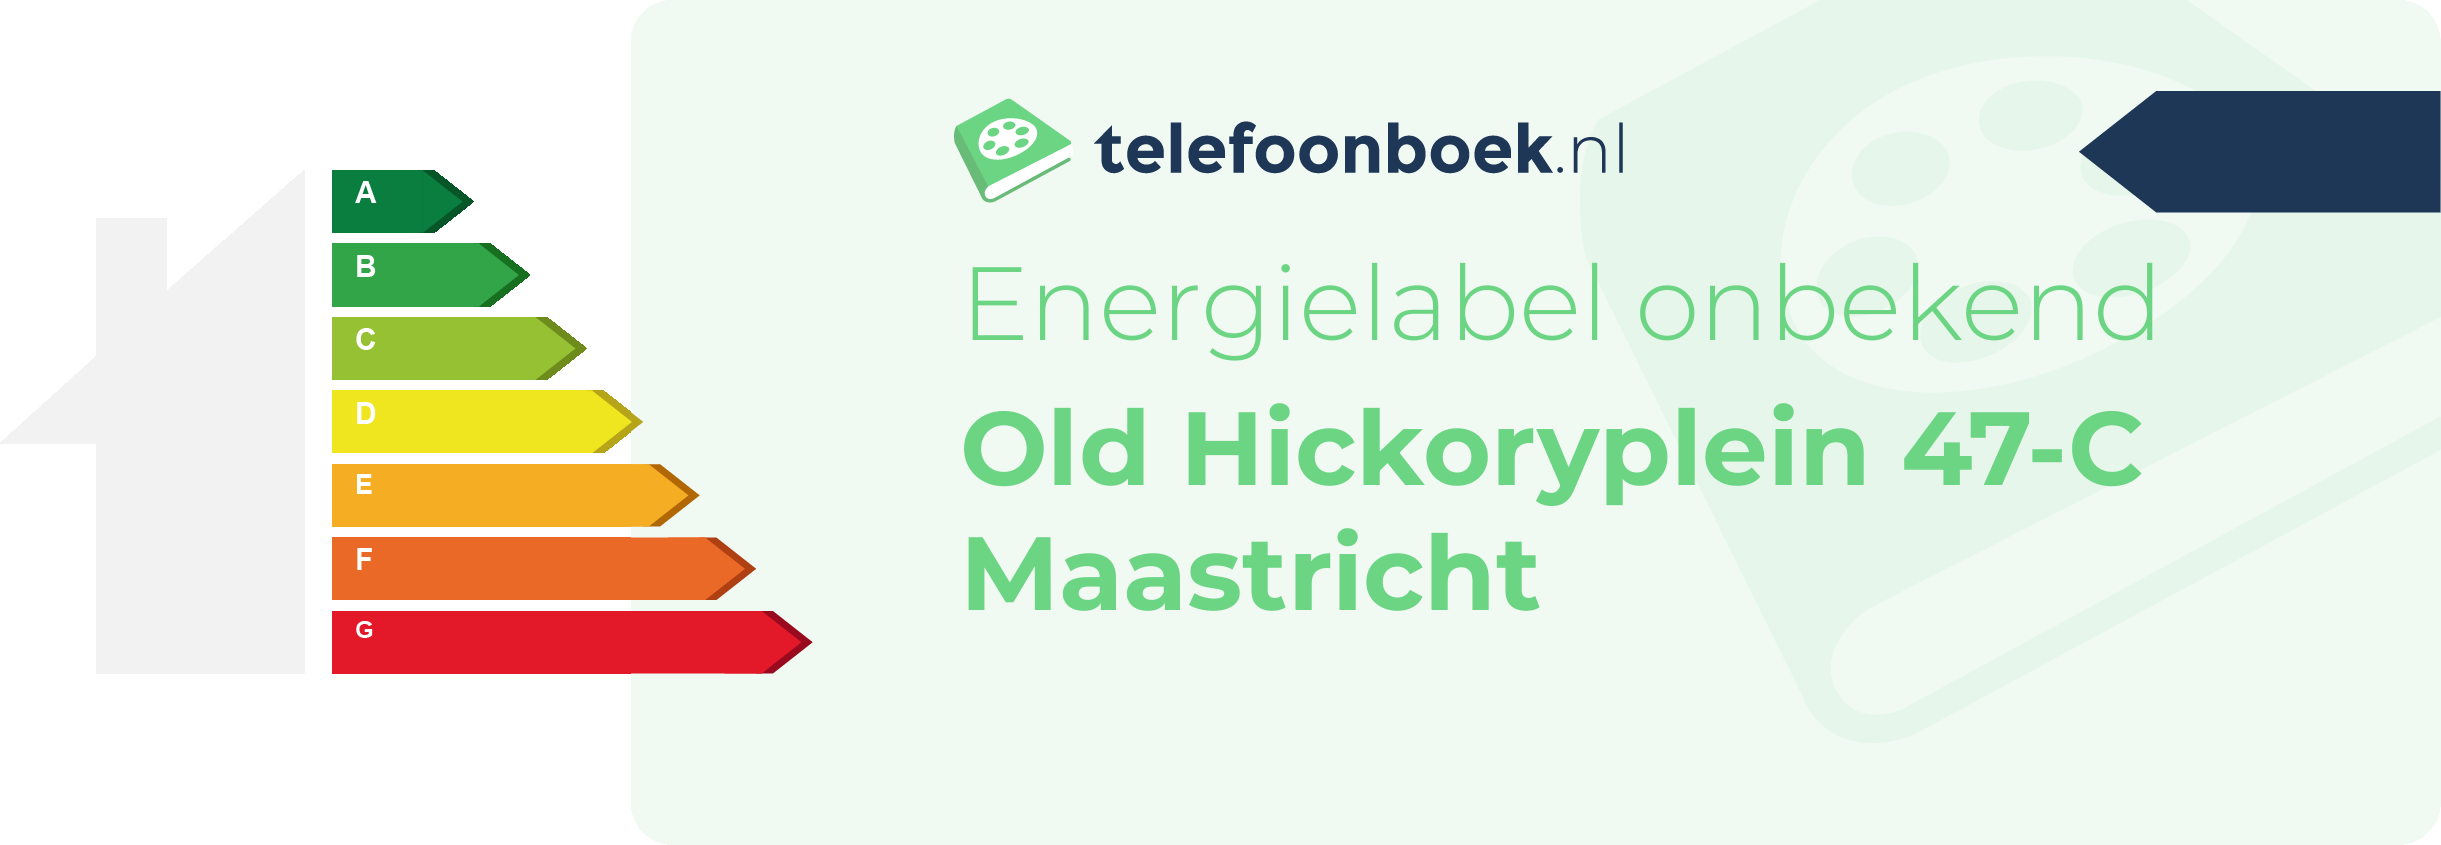 Energielabel Old Hickoryplein 47-C Maastricht